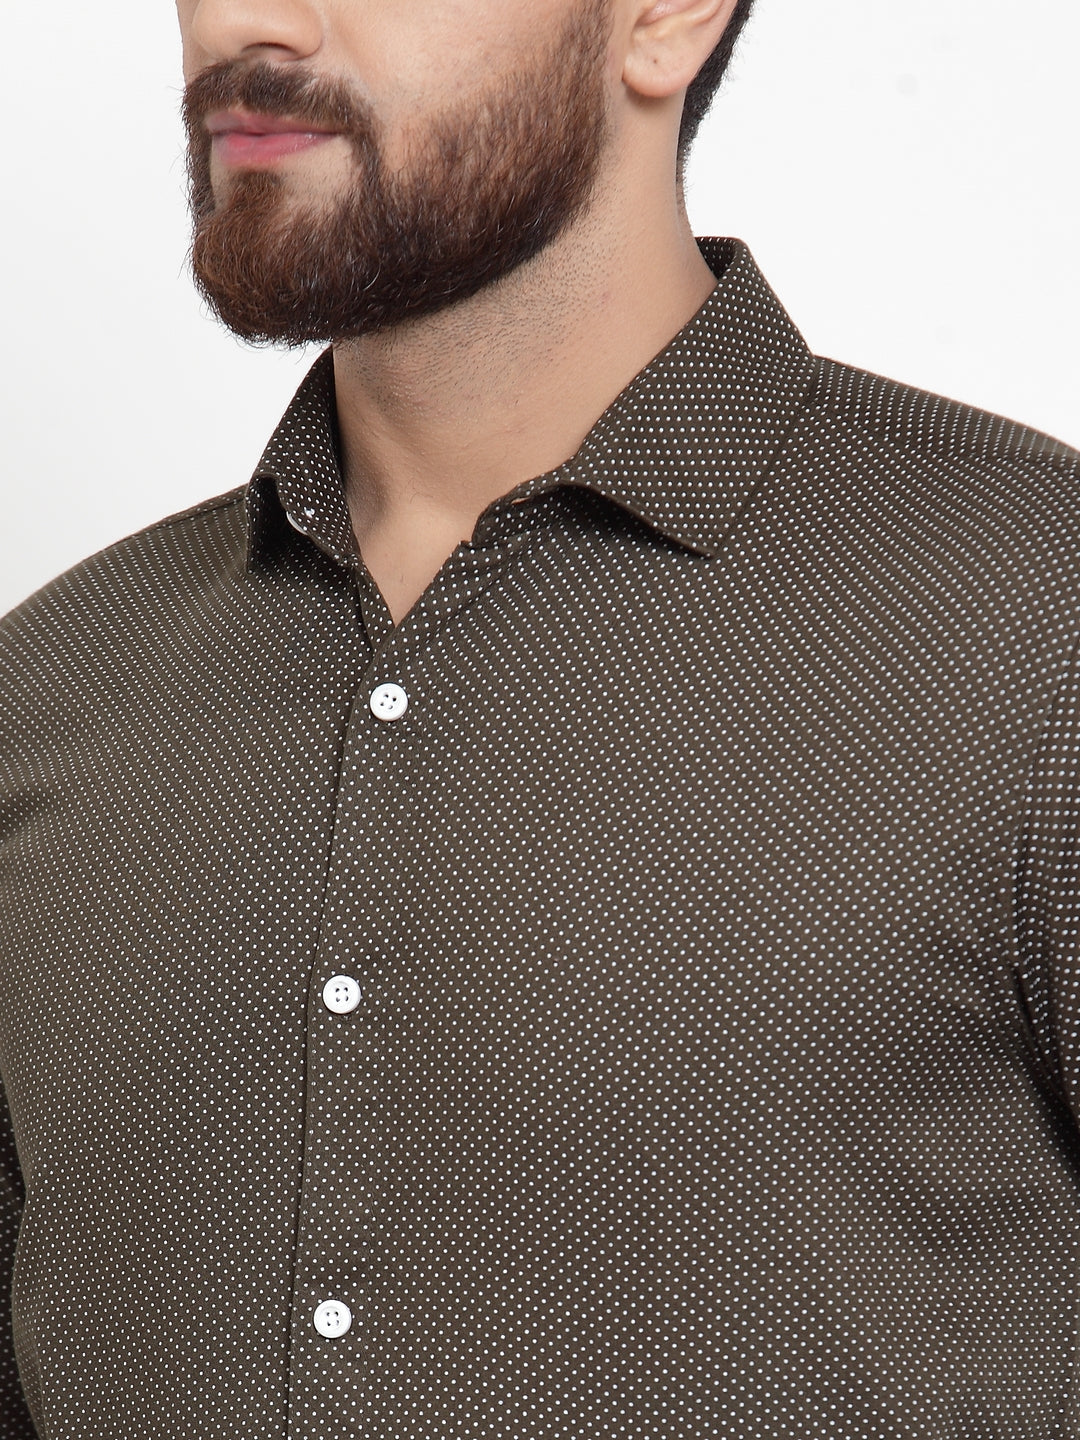 Men's Olive Cotton Polka Dots Formal Shirts ( SF 736Olive ) - Jainish